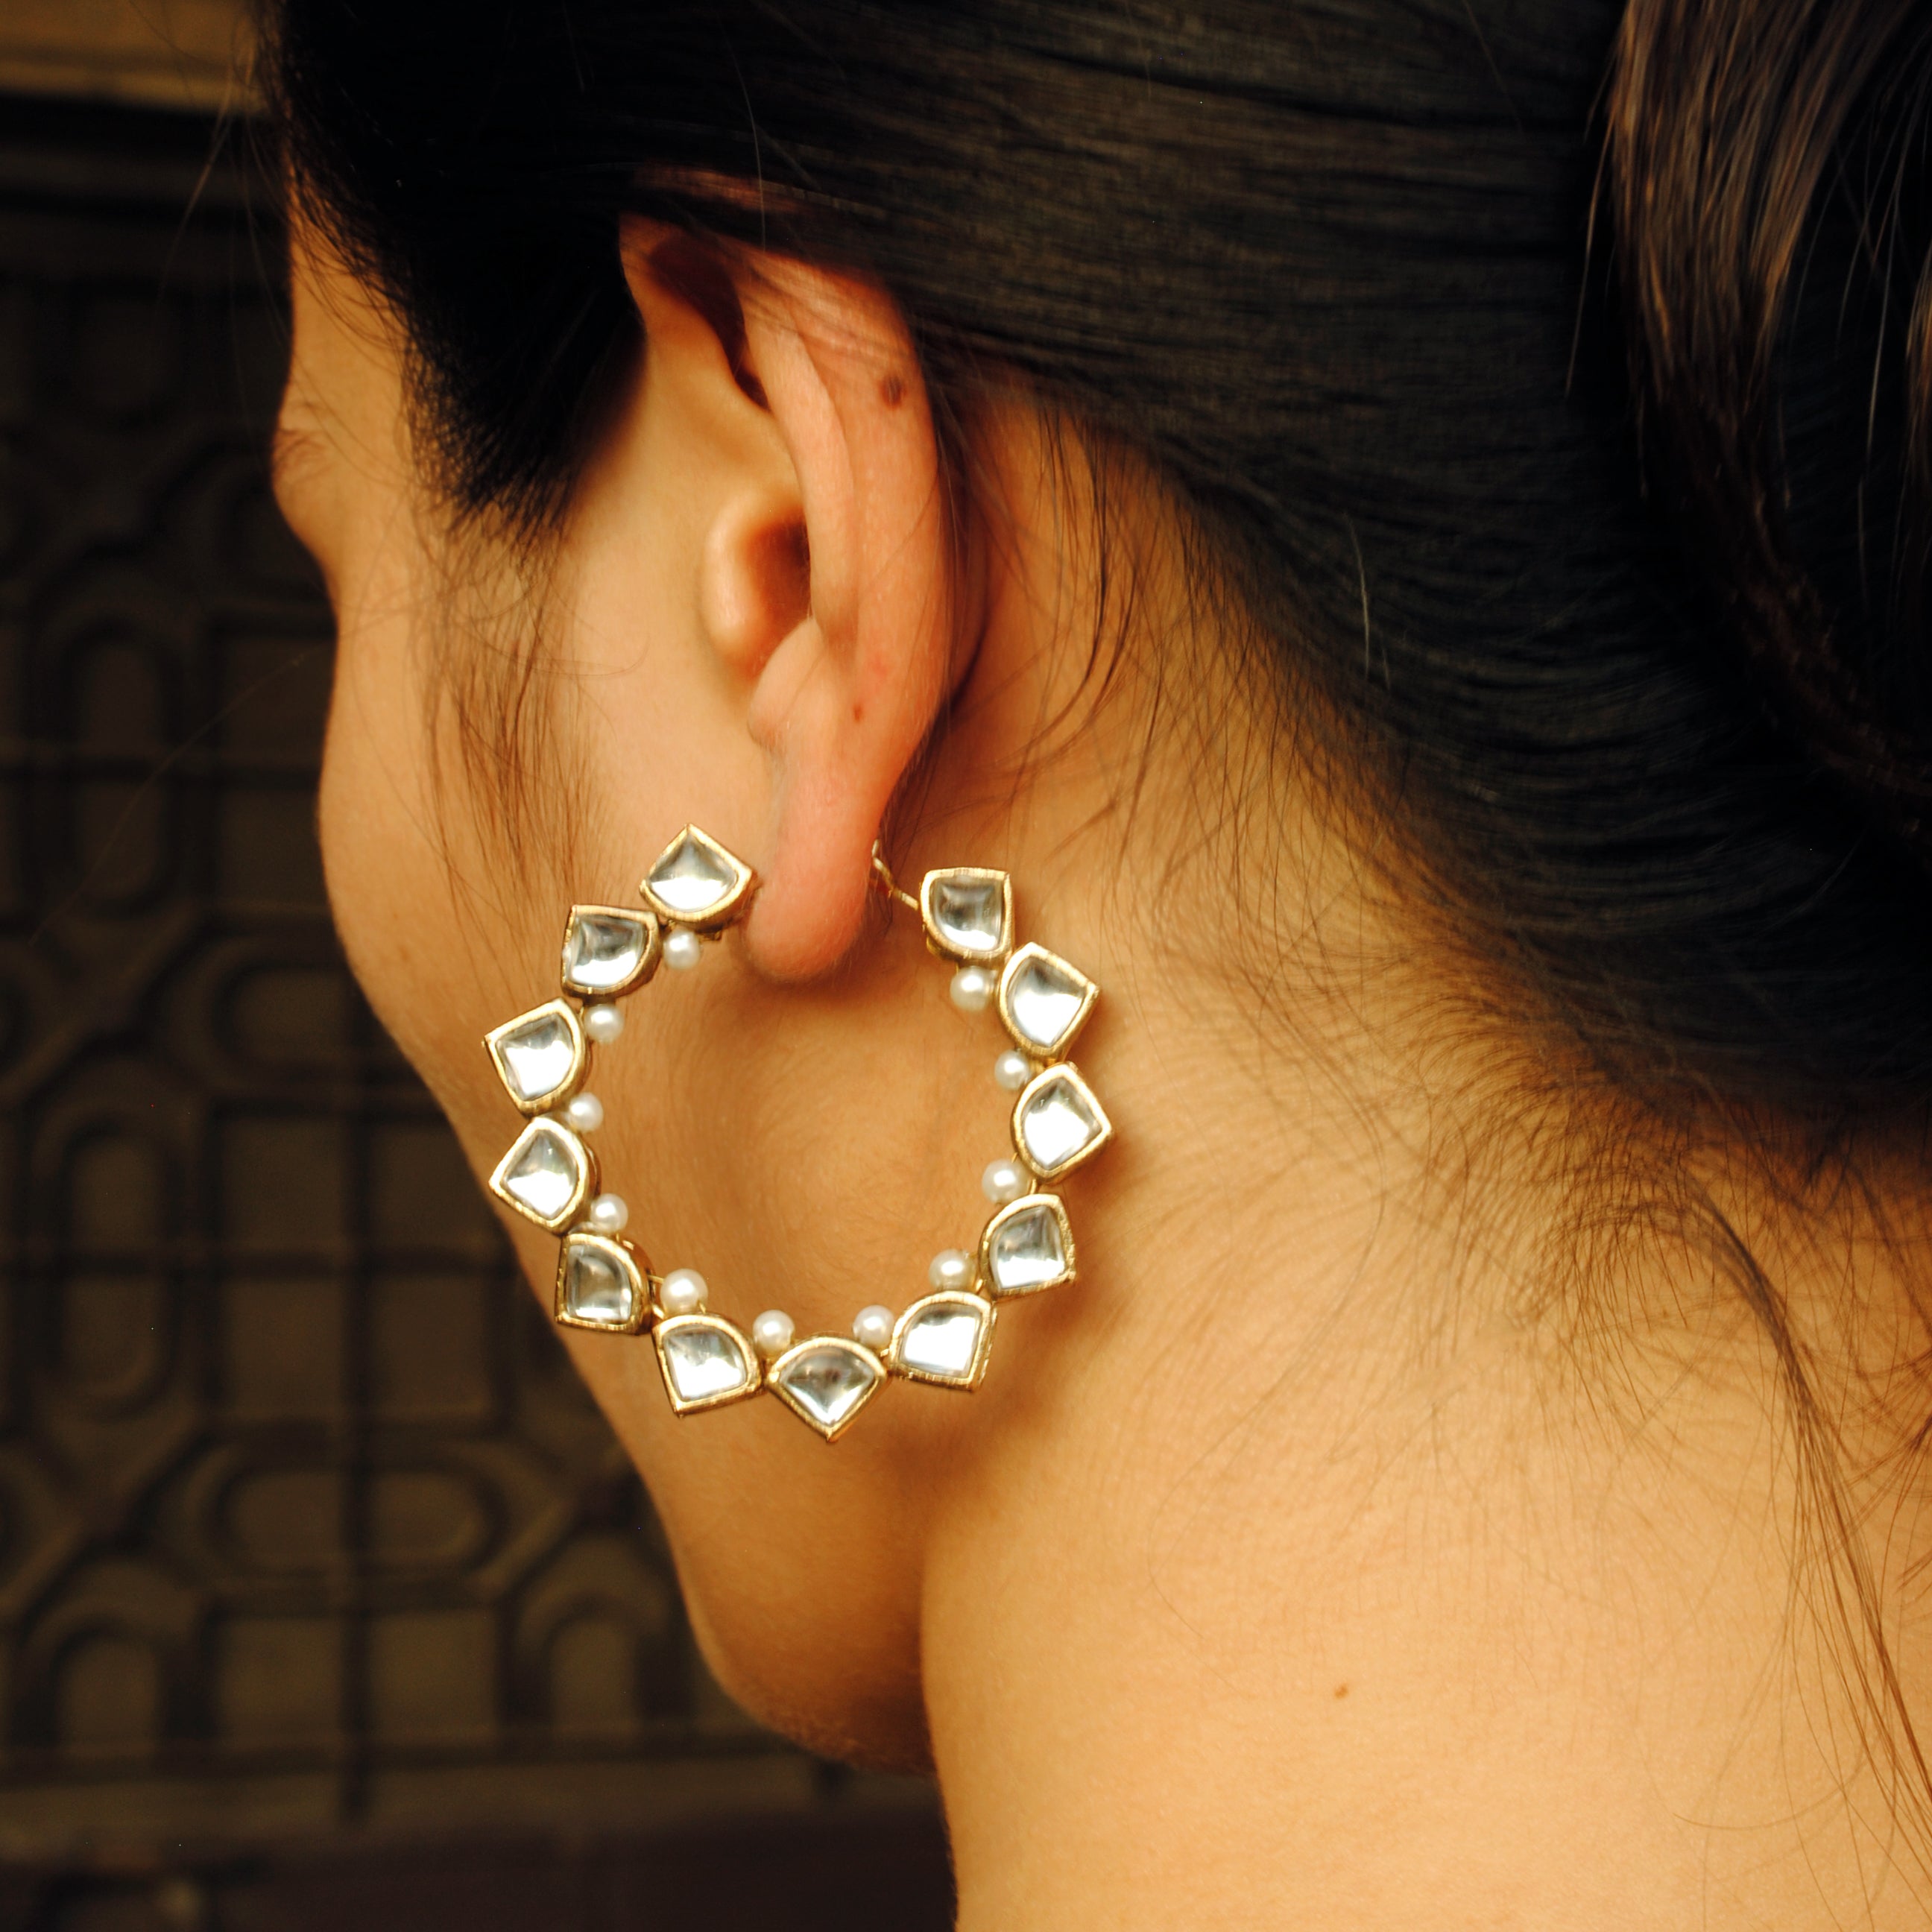 Beabhika Kundan Hoops Earrings Handmade White Pearls Earrings Designer Hoop Earrings Jewelry For Matching Ethnic Suit Saree Jewelry Lightweight Earrings Daily Wear Party Wear Jewelry Online Cash On Delivery